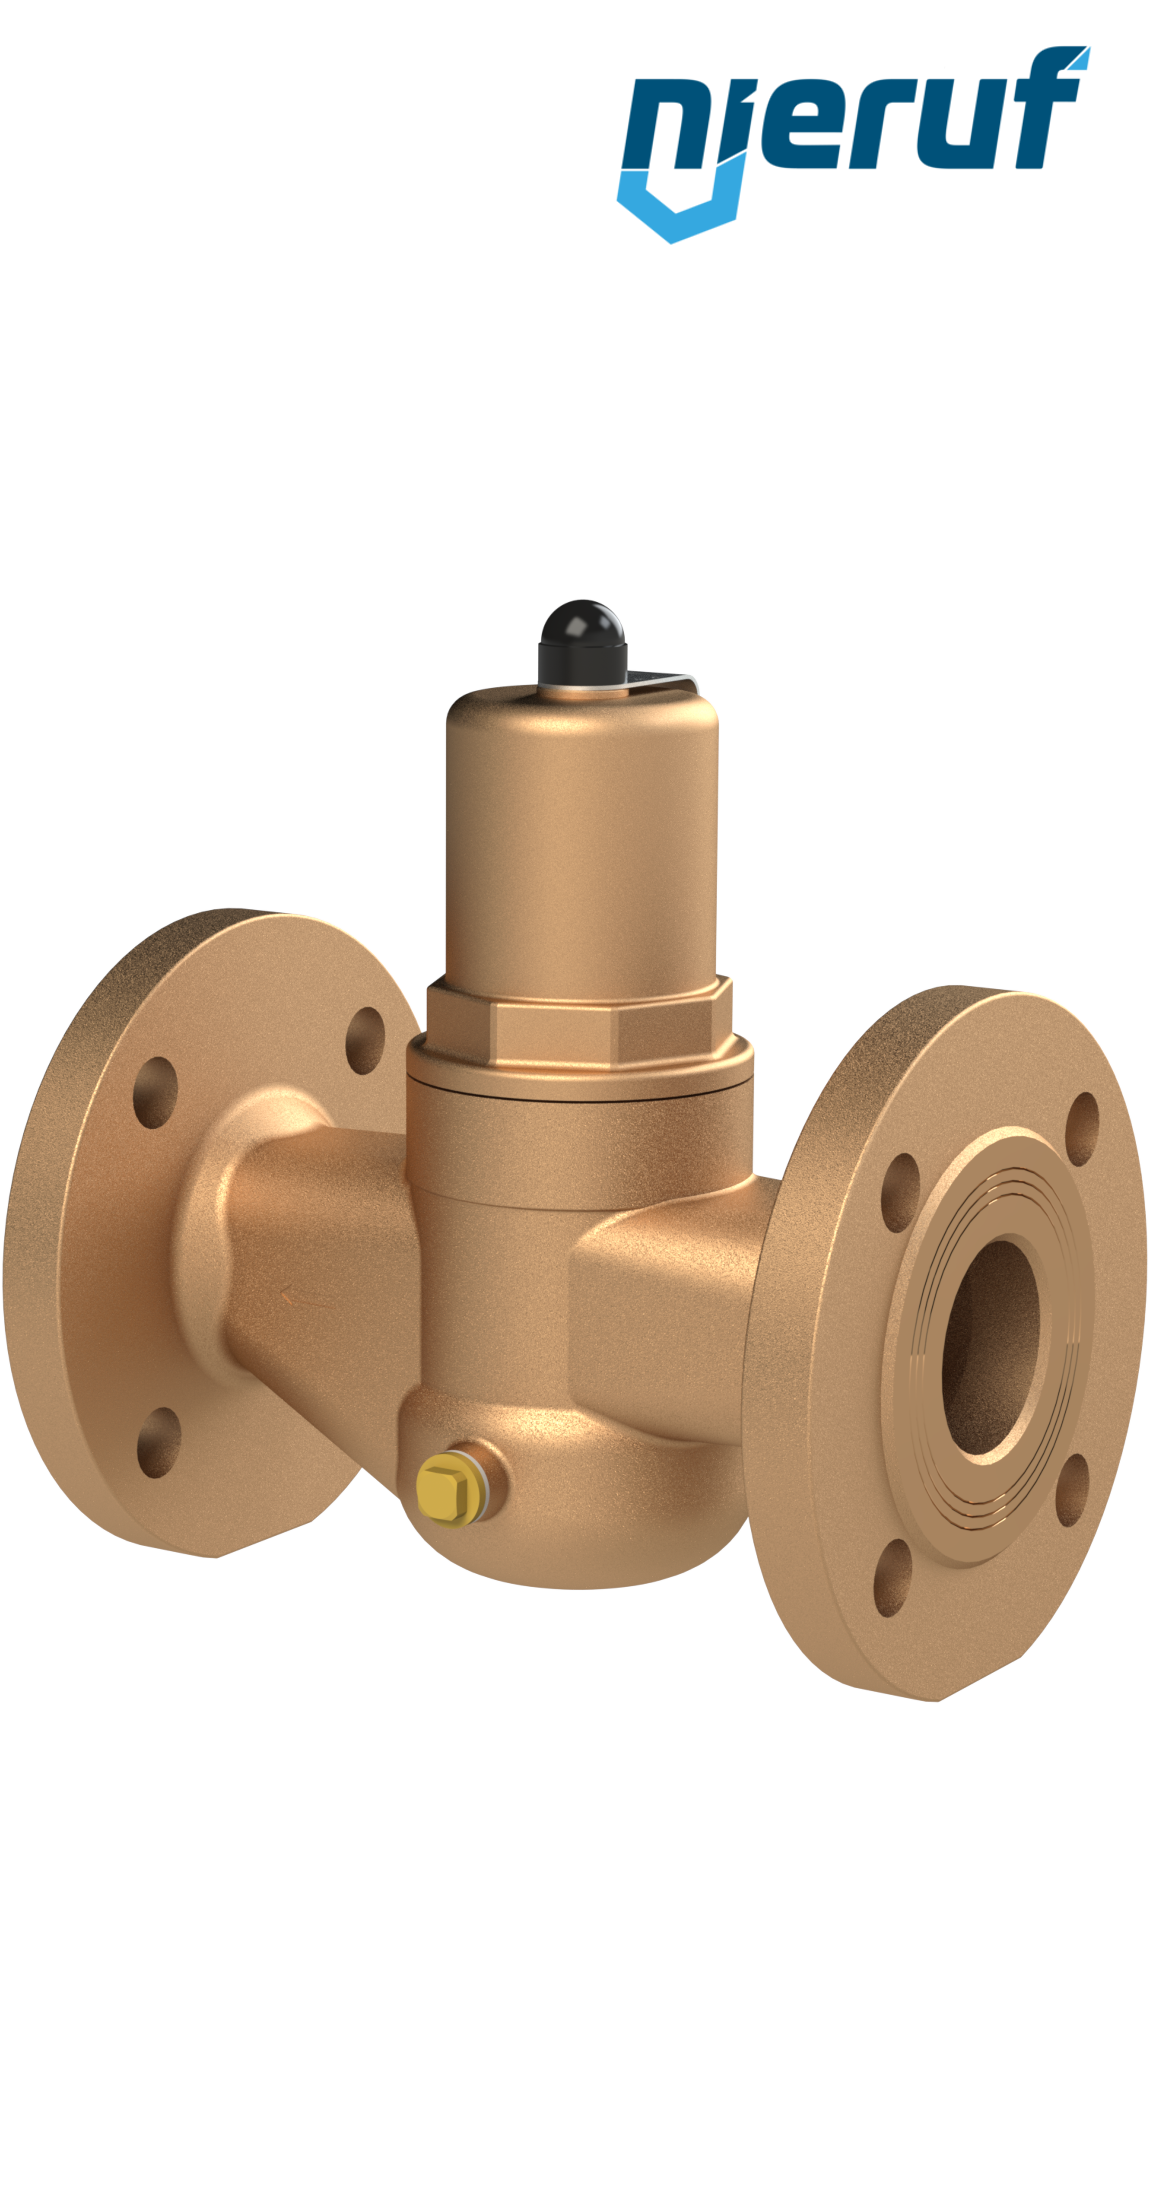 Flange-pressure reducing valve DN 20 PN16 DM05 gunmetal/brass EPDM 1.0 - 8.0 bar